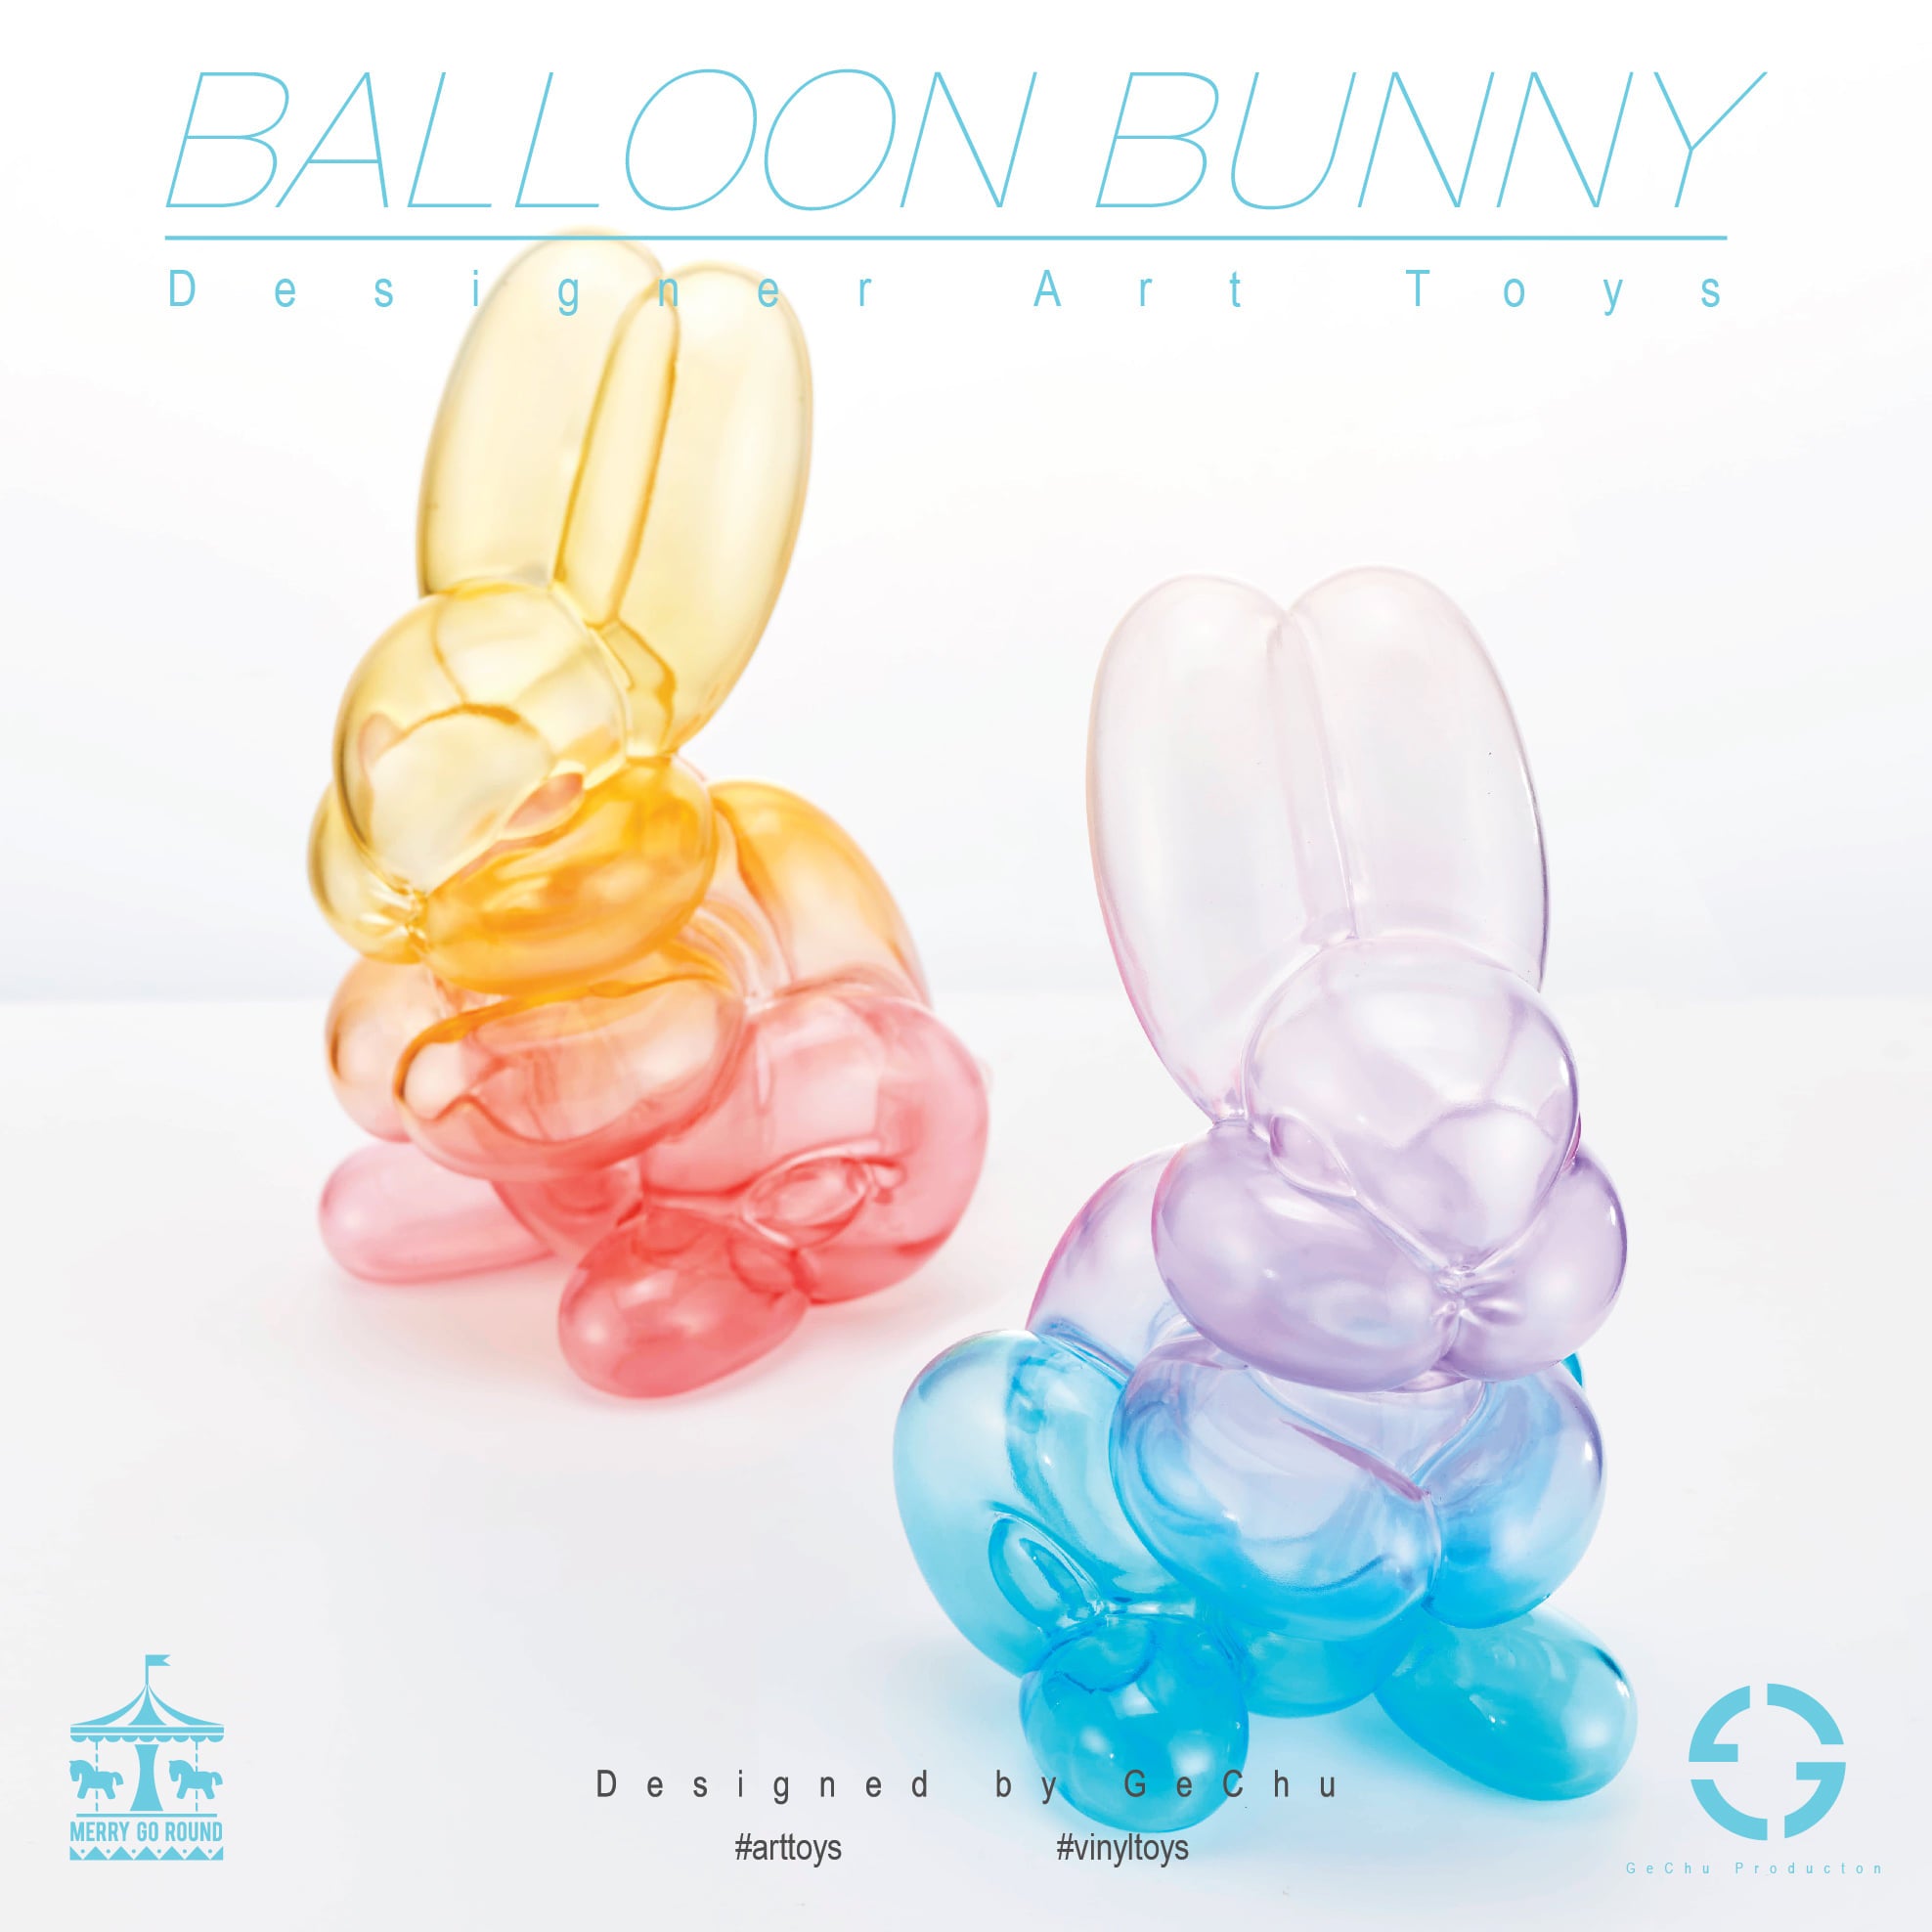 Balloon Bunny by GeChu